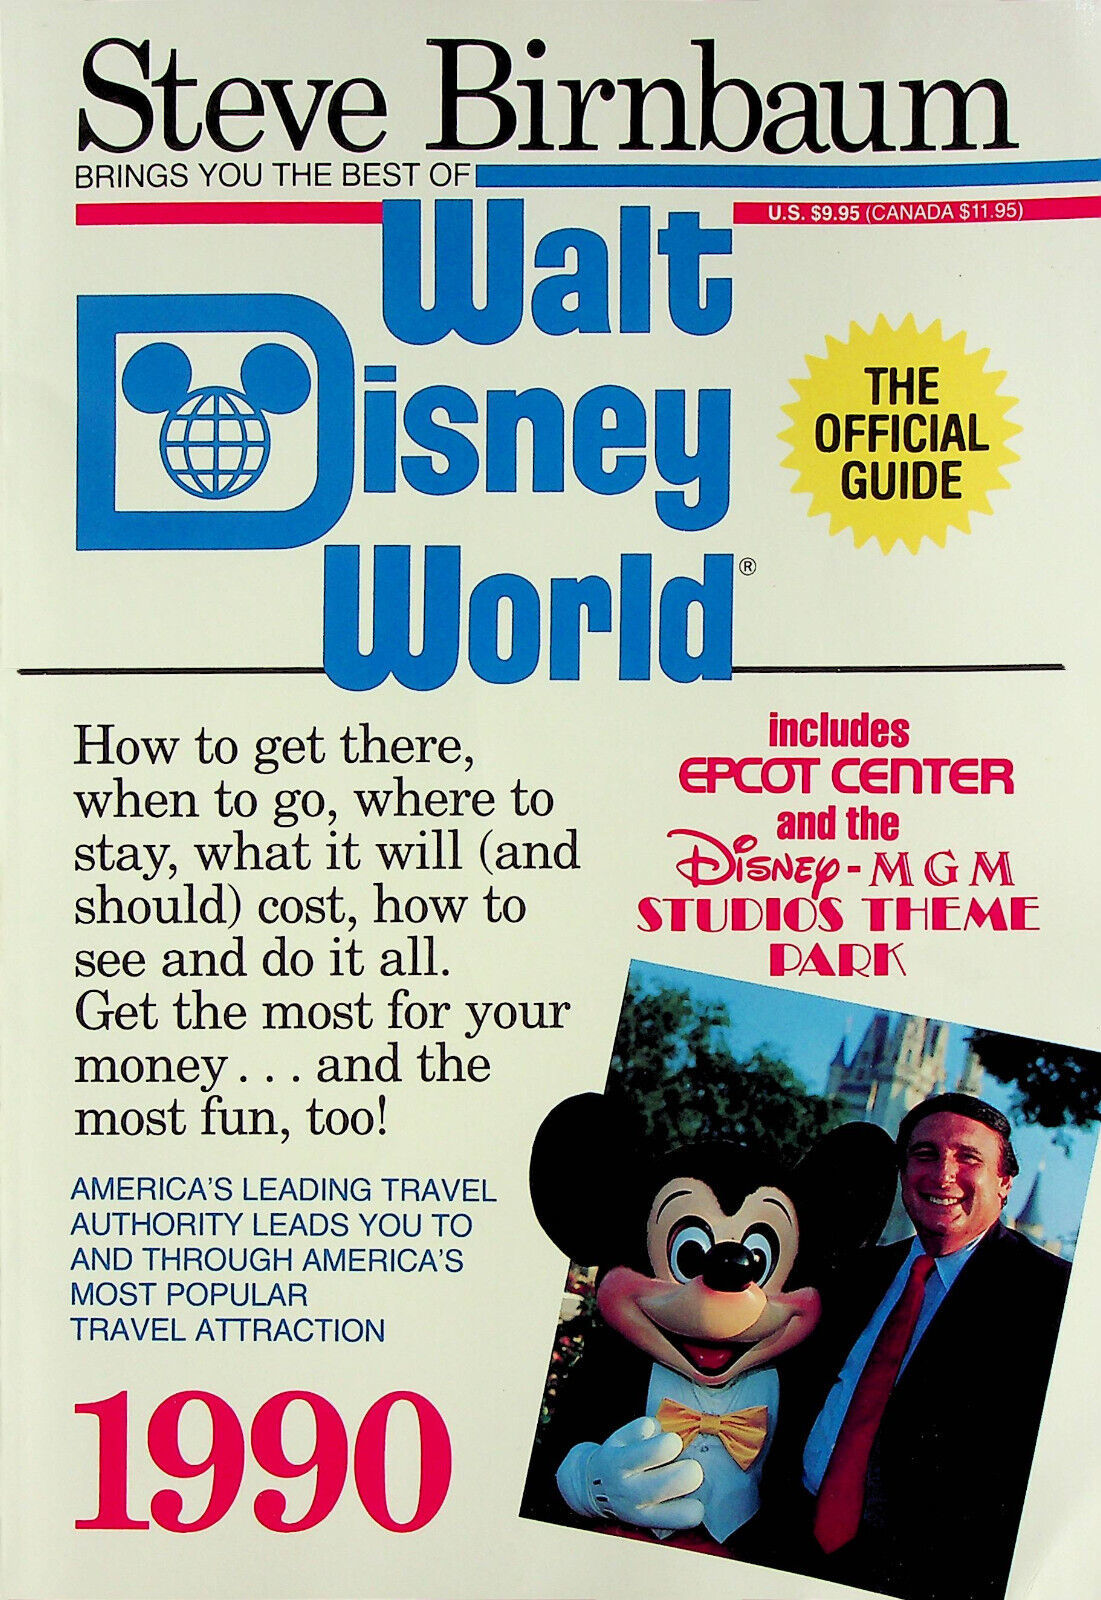 Steve Birnbaum's Guide to Walt Disney World 1990 - Lightly Used - $22.43